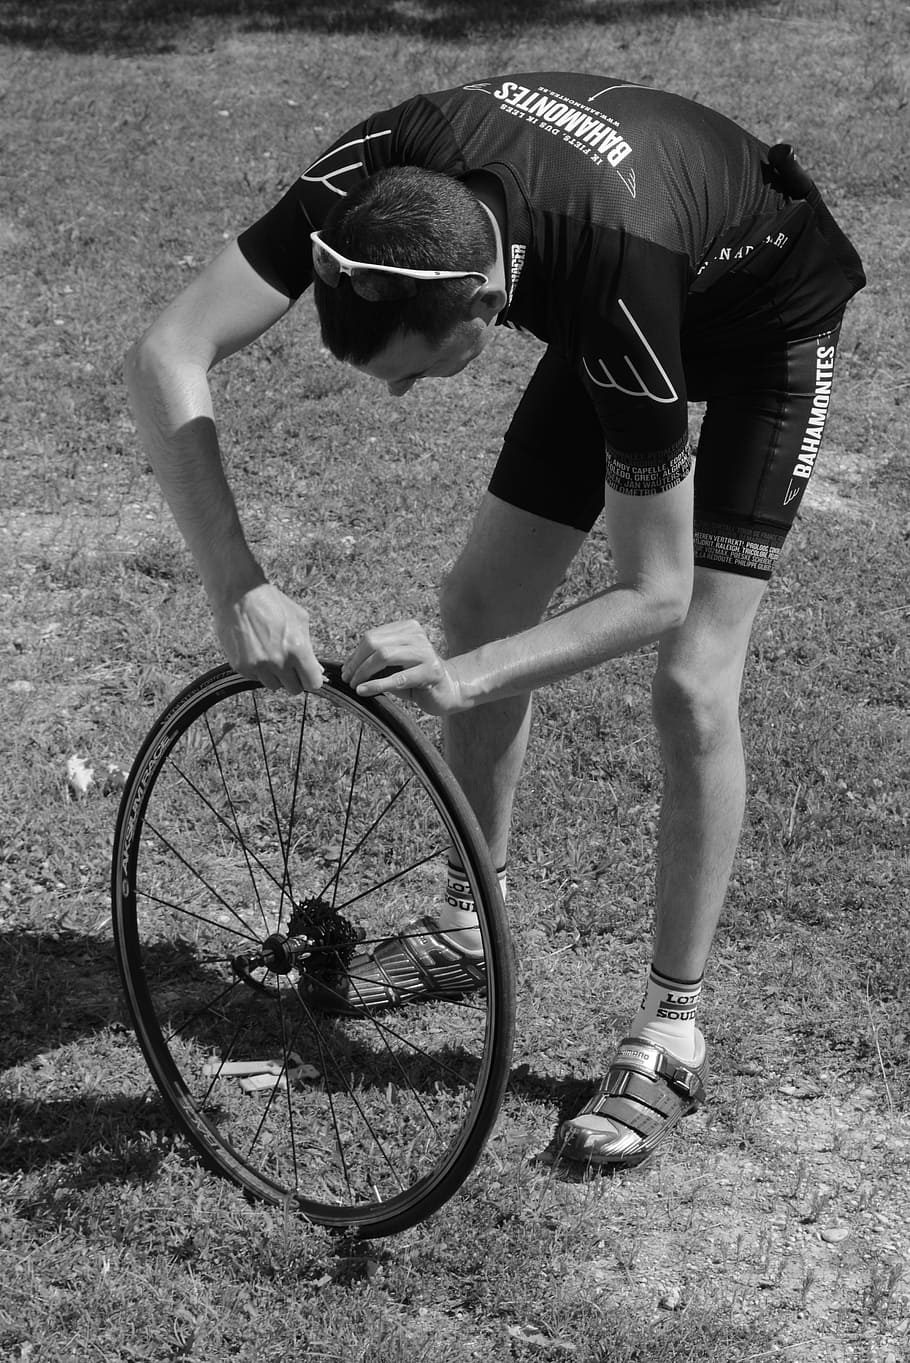 bad luck, professional road bicycle racer, flat tire, repair, wheel, bicycle wheel, black And White, men, sport, people